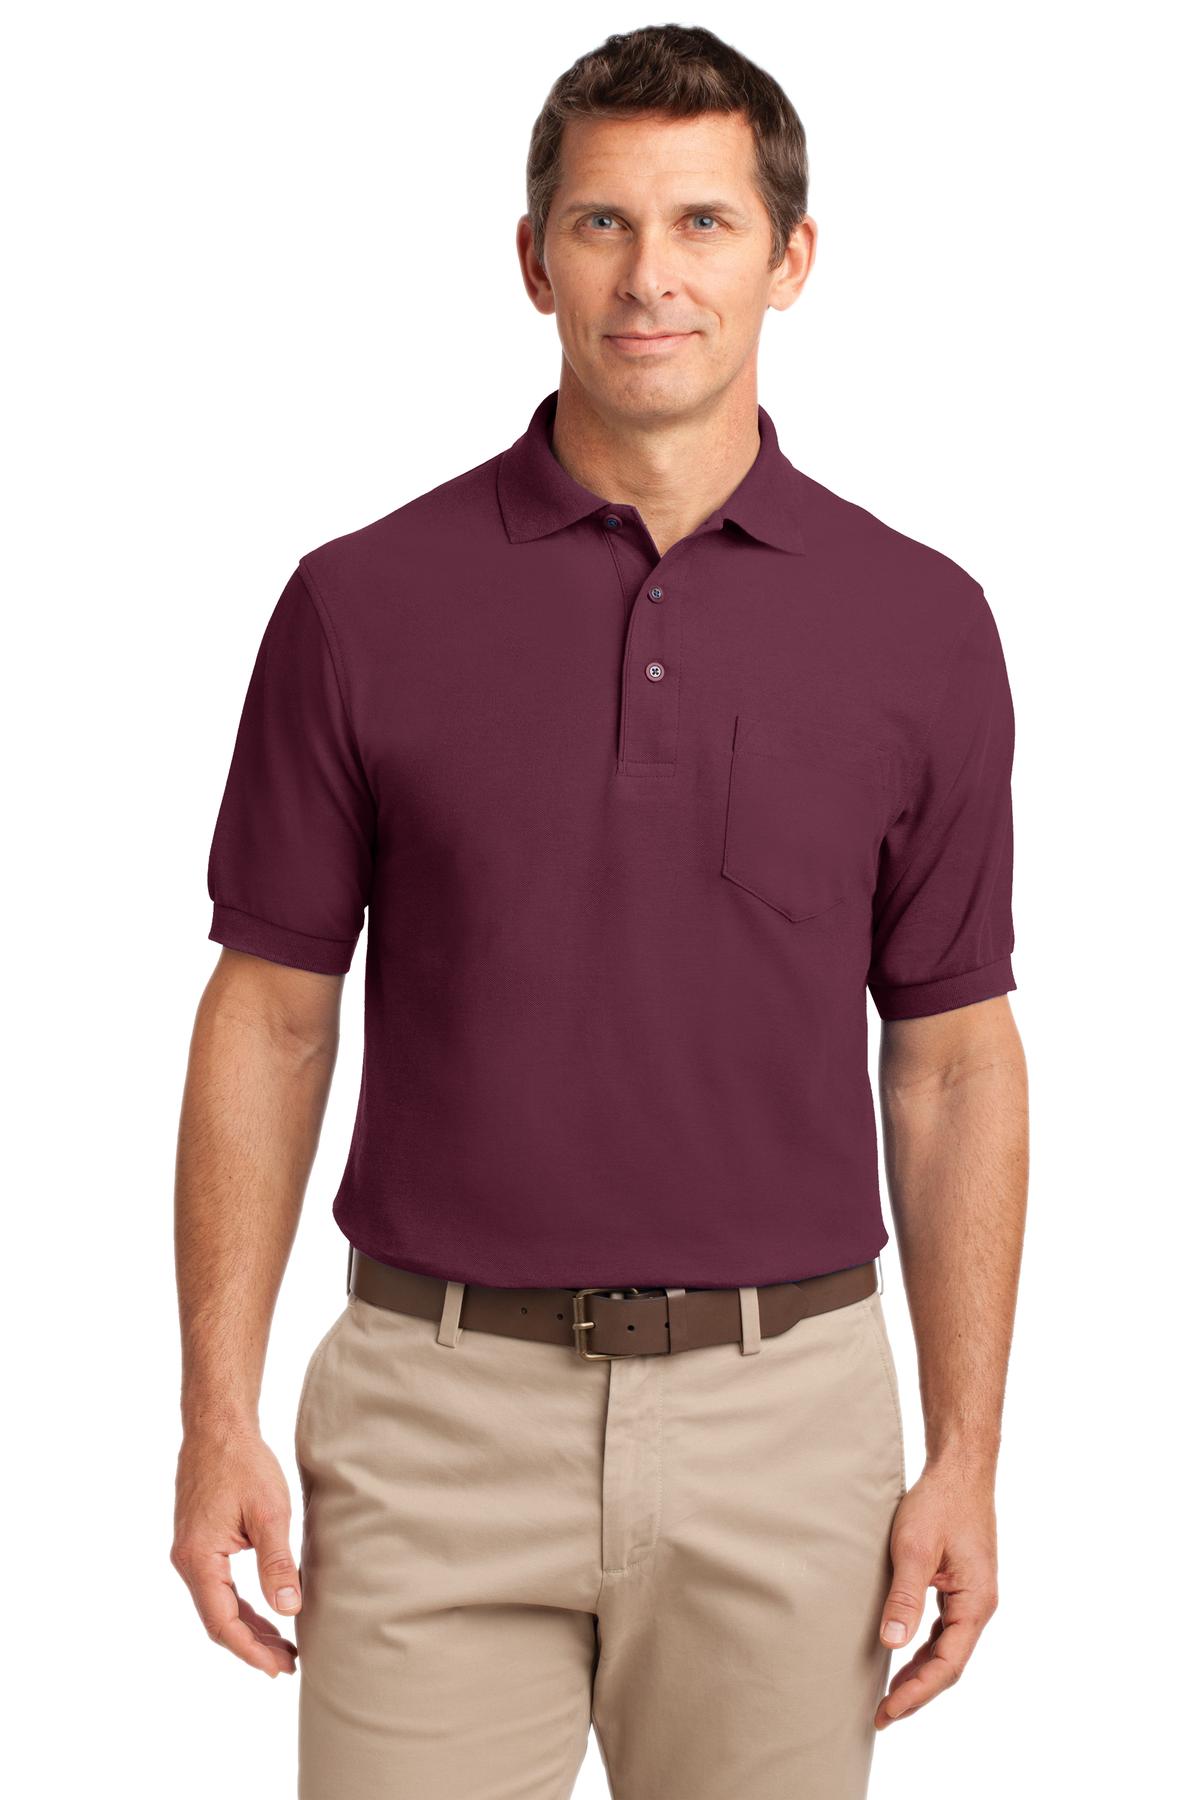 Ed Garments Big And Tall Short Sleeve Pique Polo Pocket Shirt XX-Large NAVY